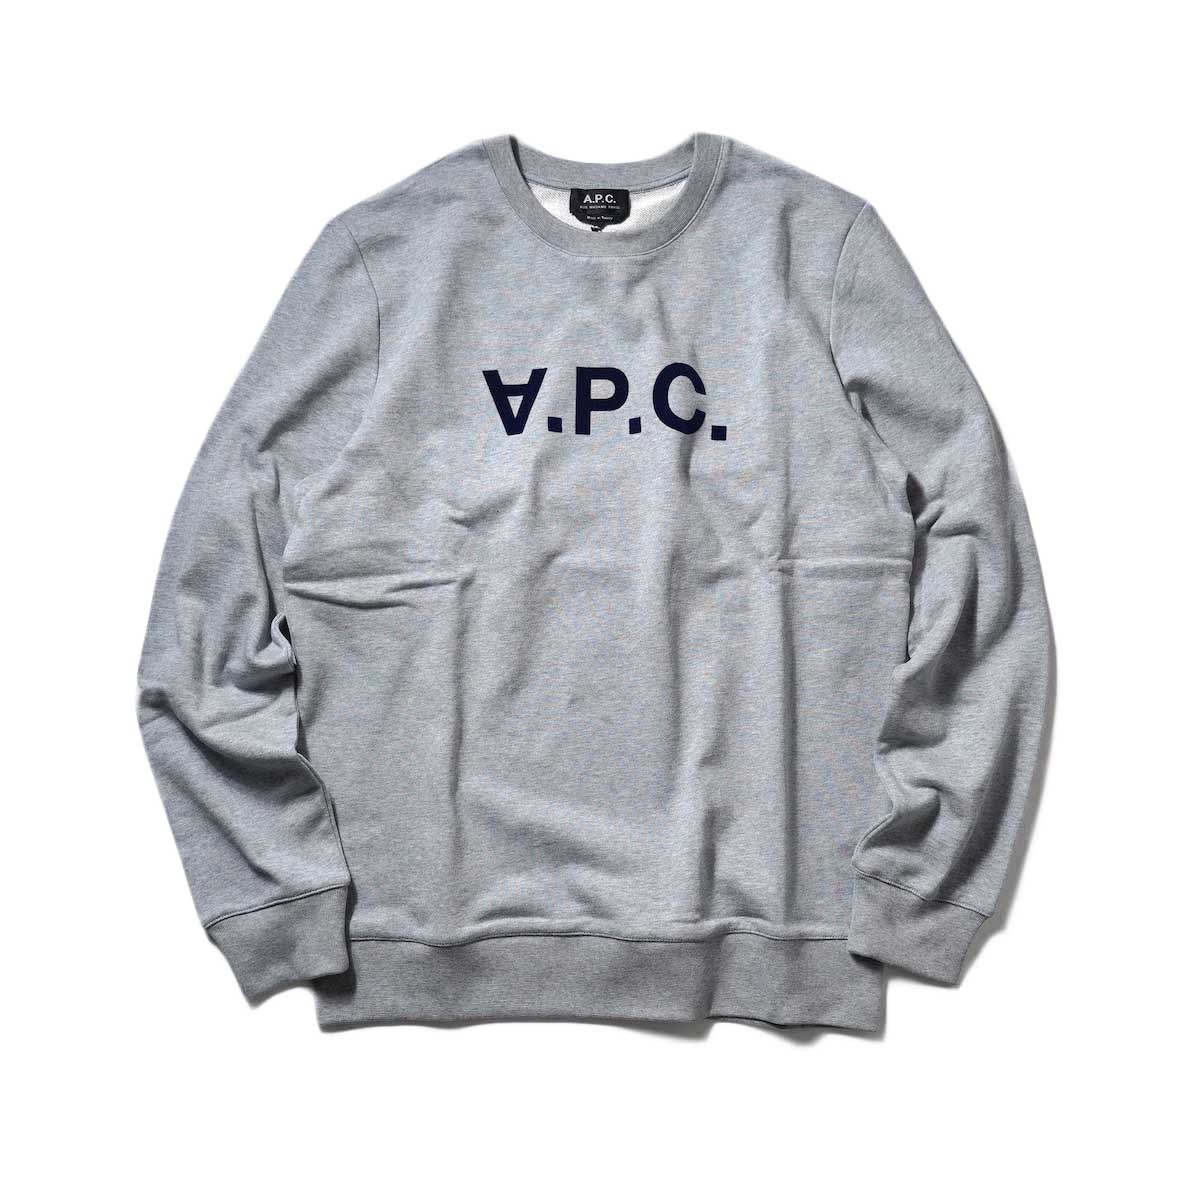 A.P.C. / VPC スウェットシャツ (Gray)